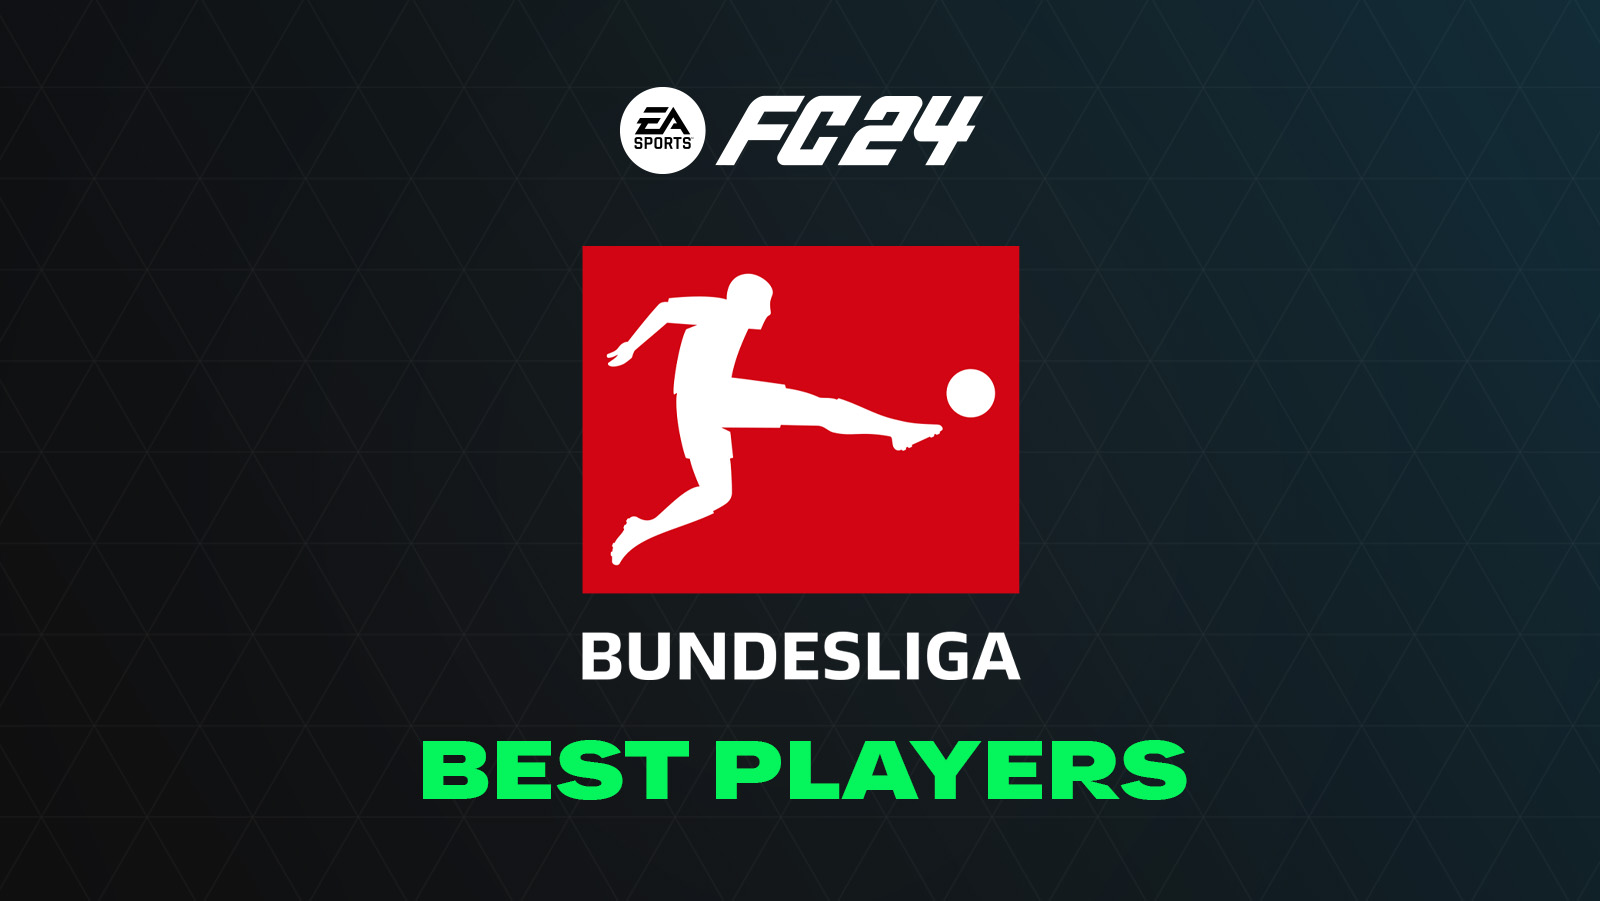 FC 24 Top Players from Bundesliga